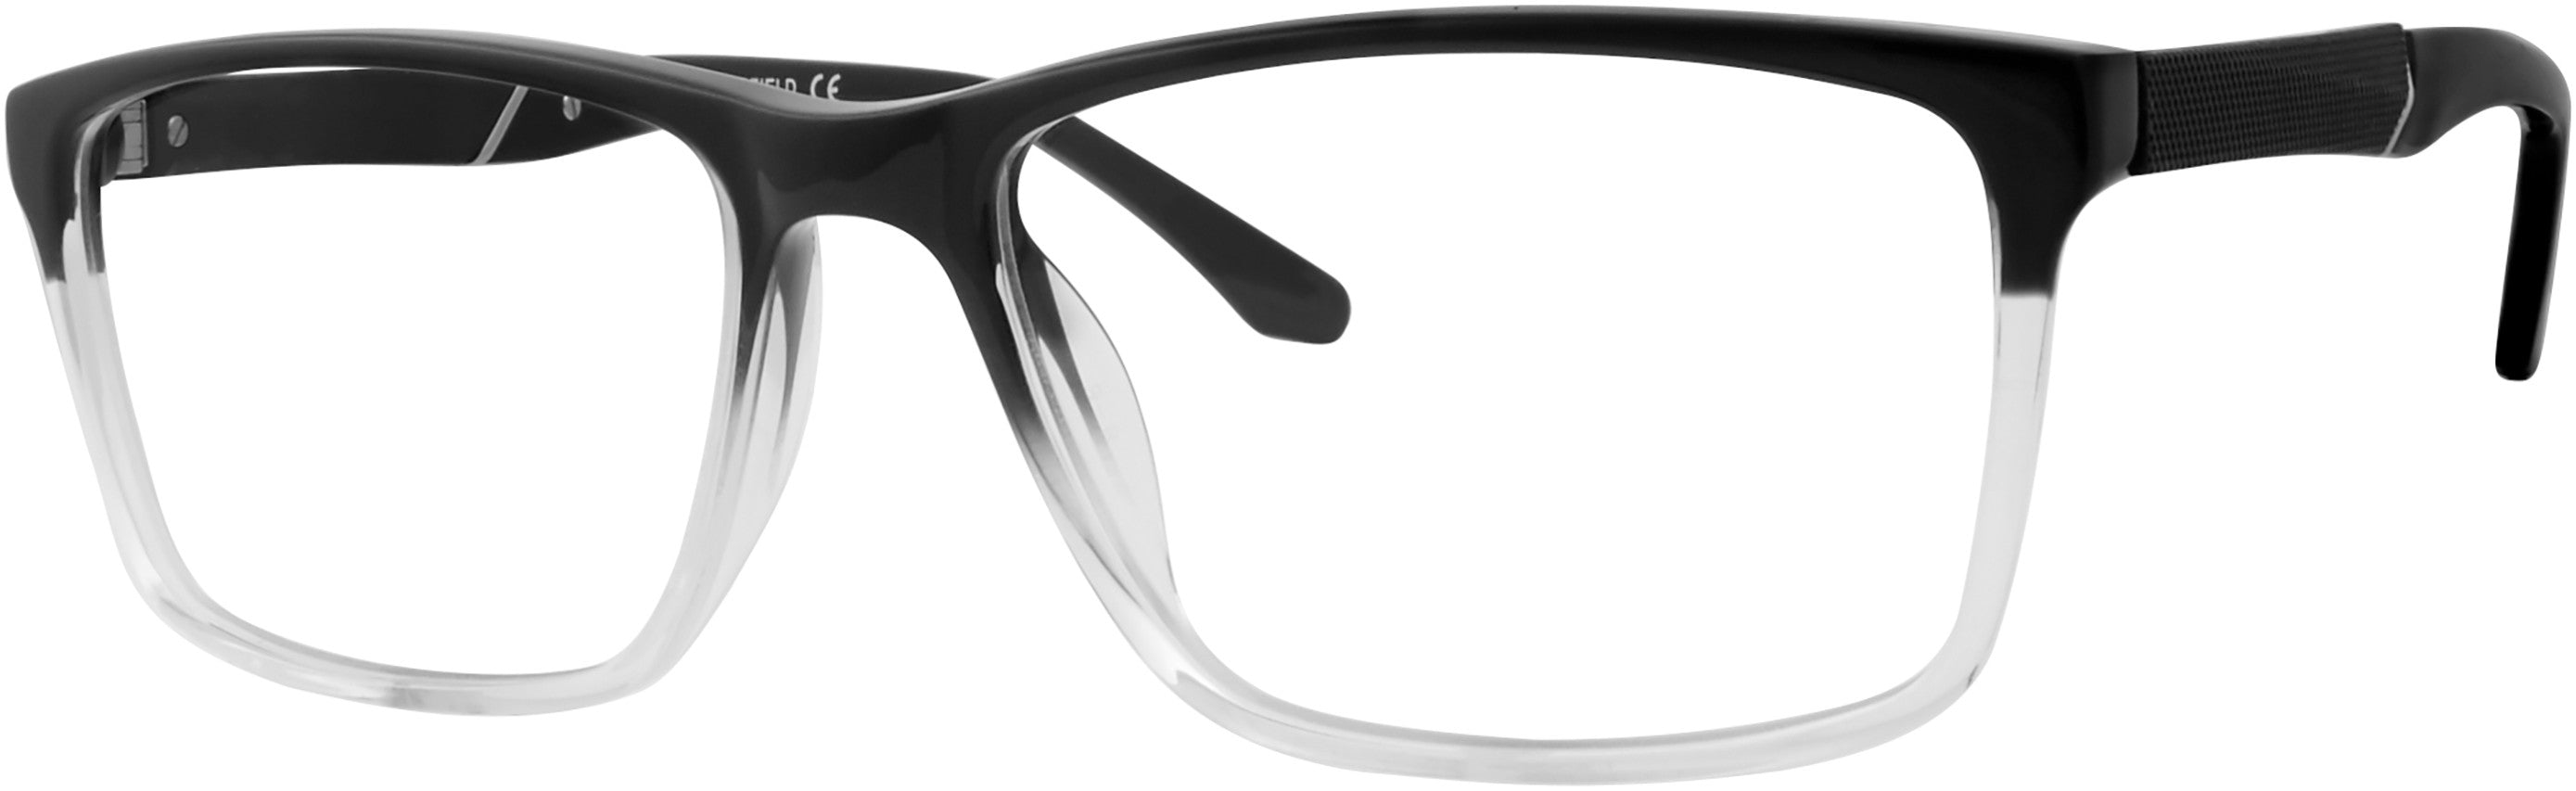  Chesterfield 66XL Rectangular Eyeglasses 07C5-07C5  Black Crystal (00 Demo Lens)